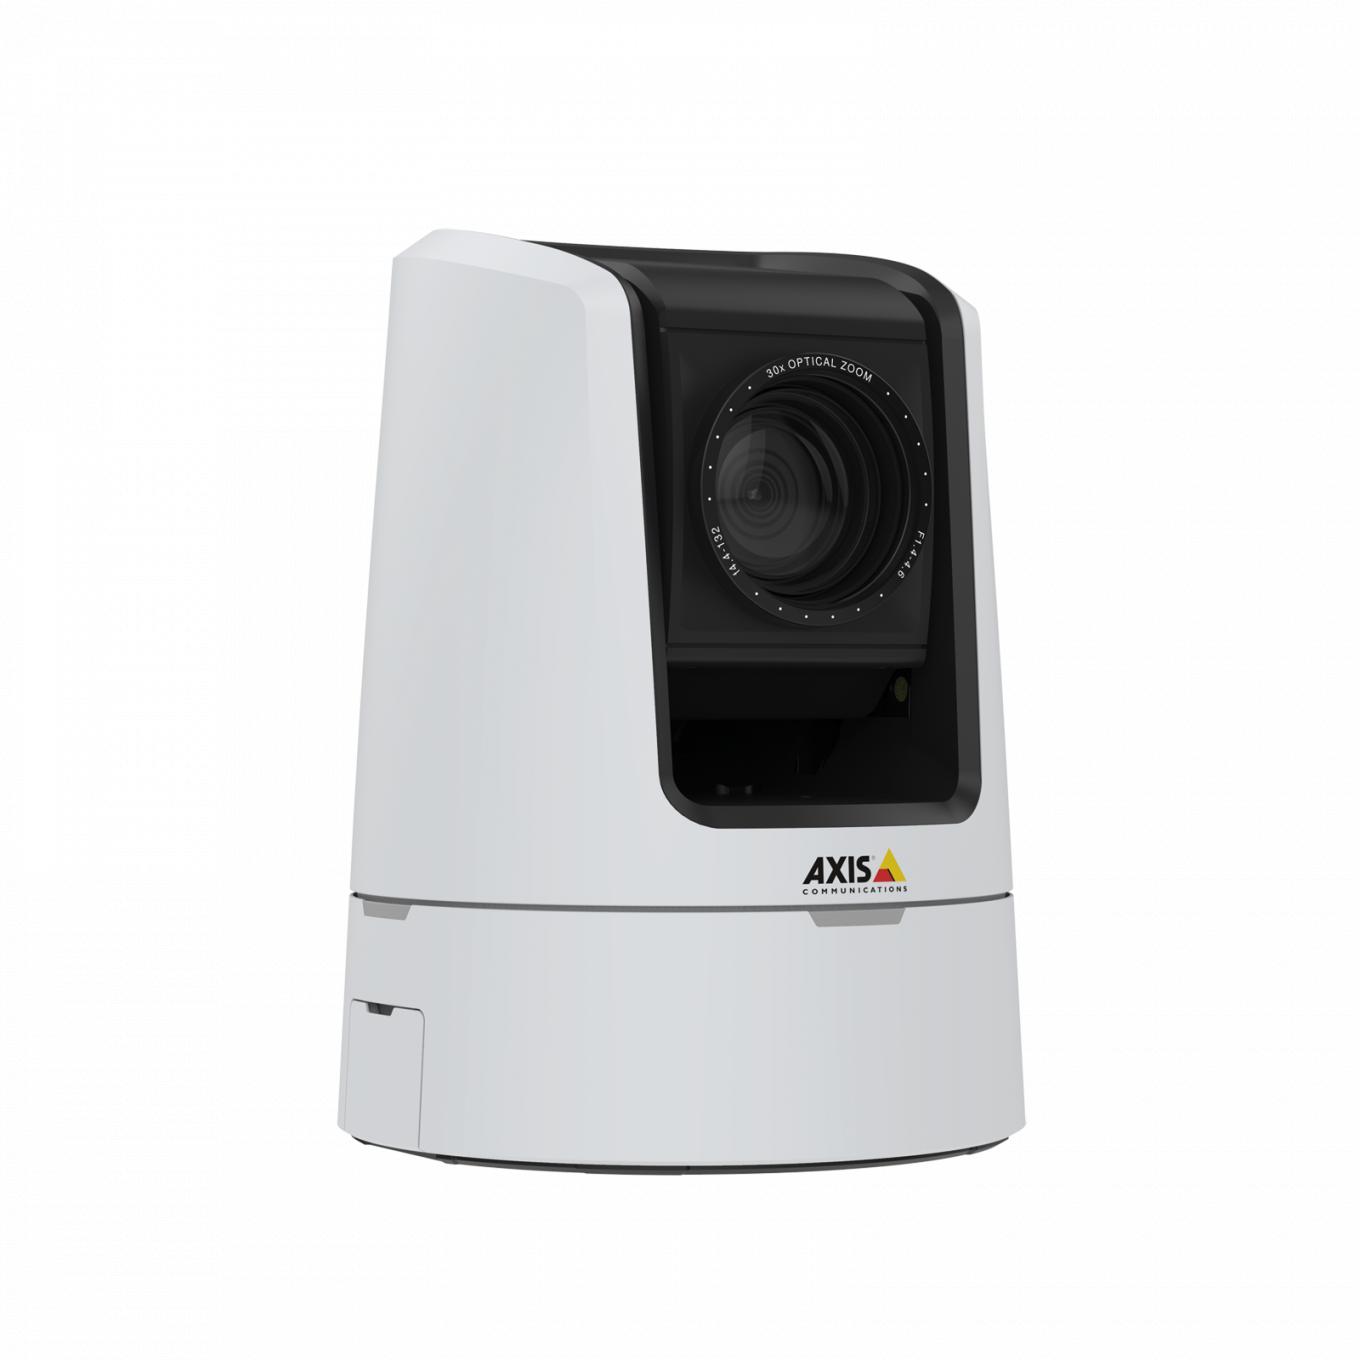 AXIS V5925 PTZ Network Cameraは、放送品質のHDTV 1080pを提供します。